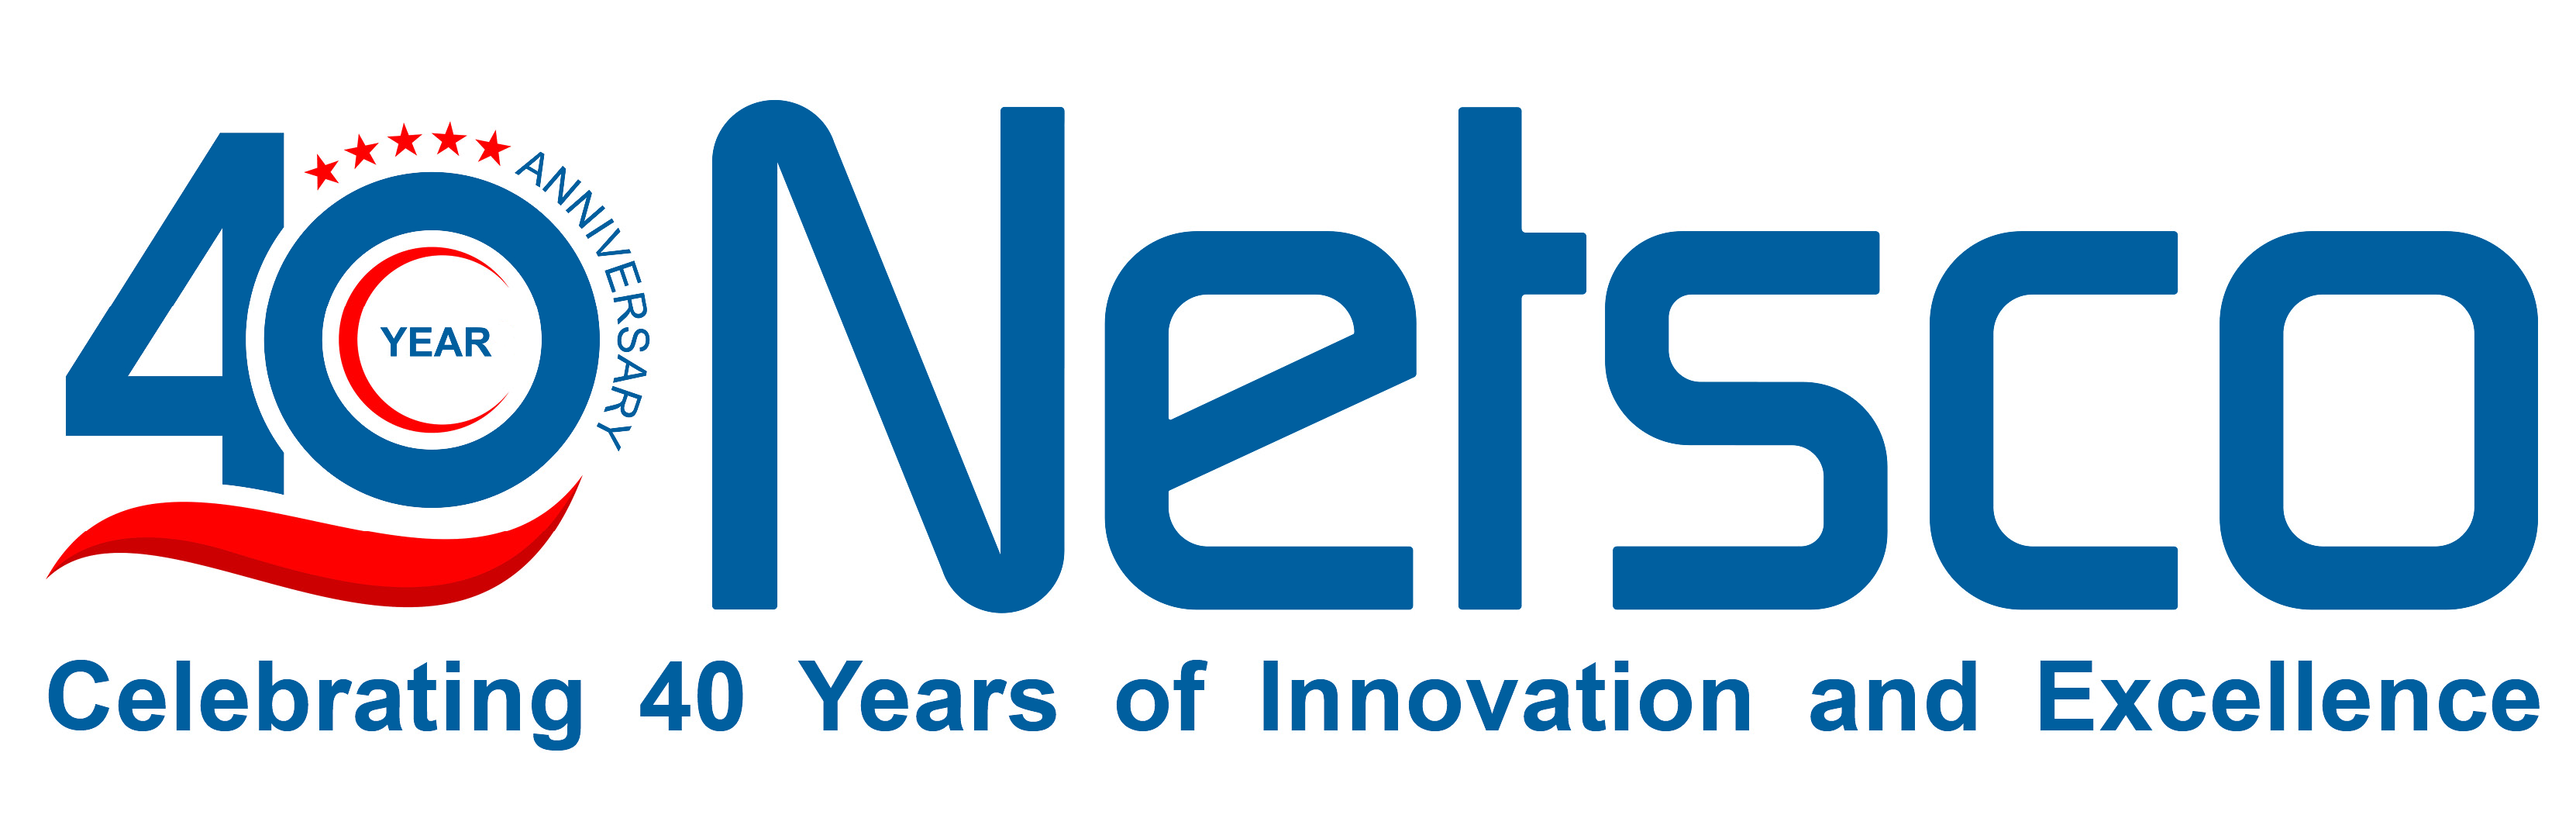 NETSCo 40 Year Logo